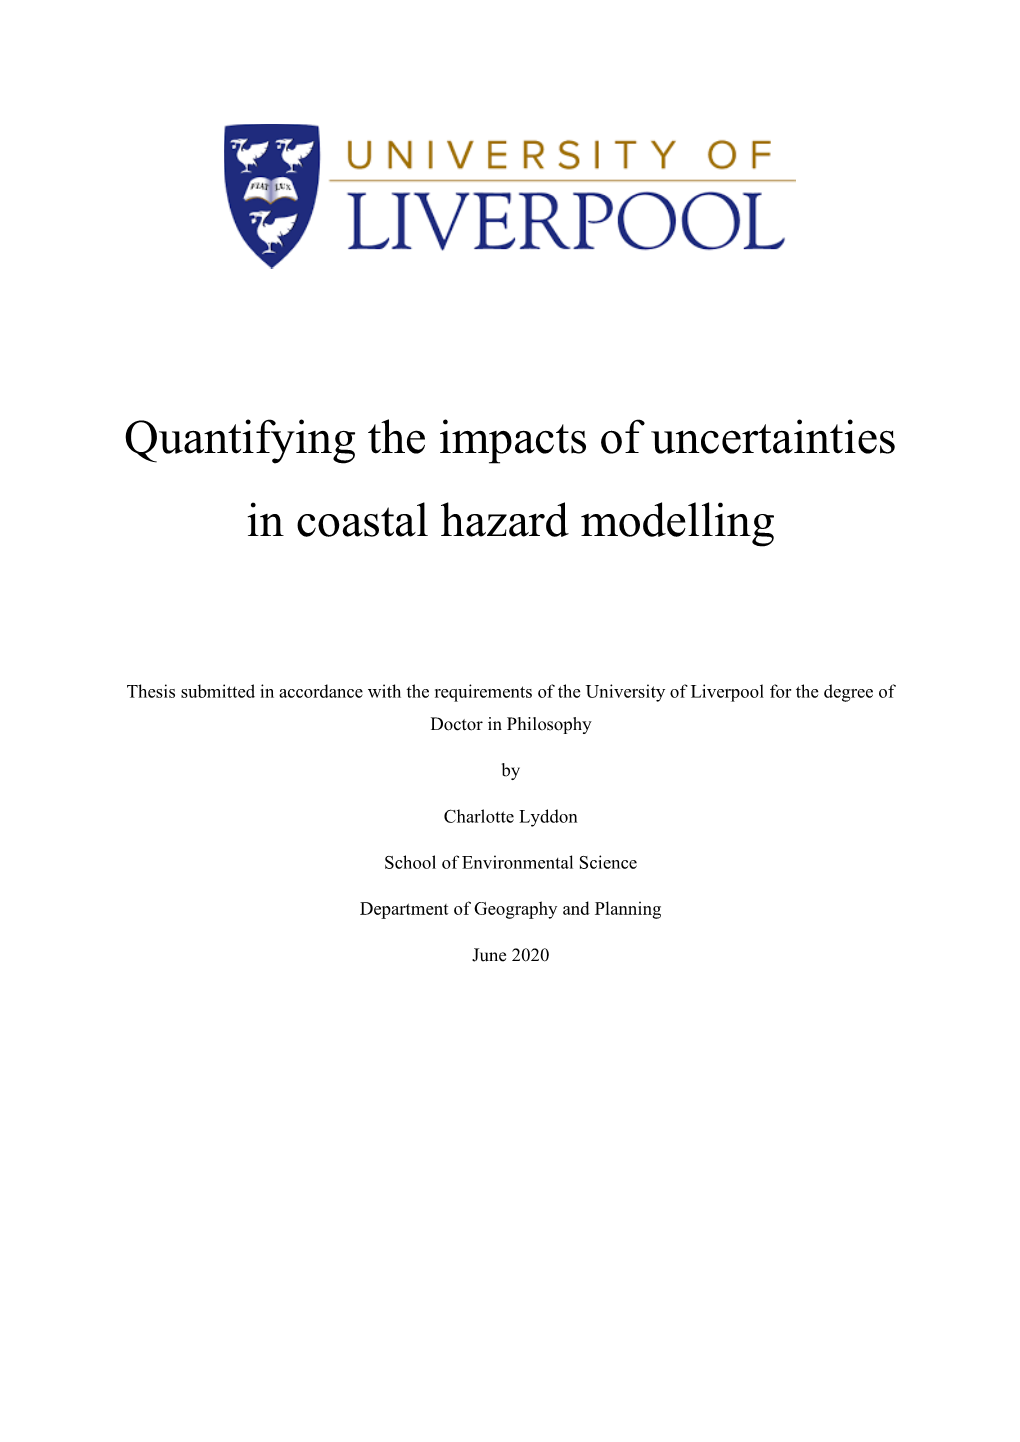 Quantifying the Impacts of Uncertainties in Coastal Hazard Modelling